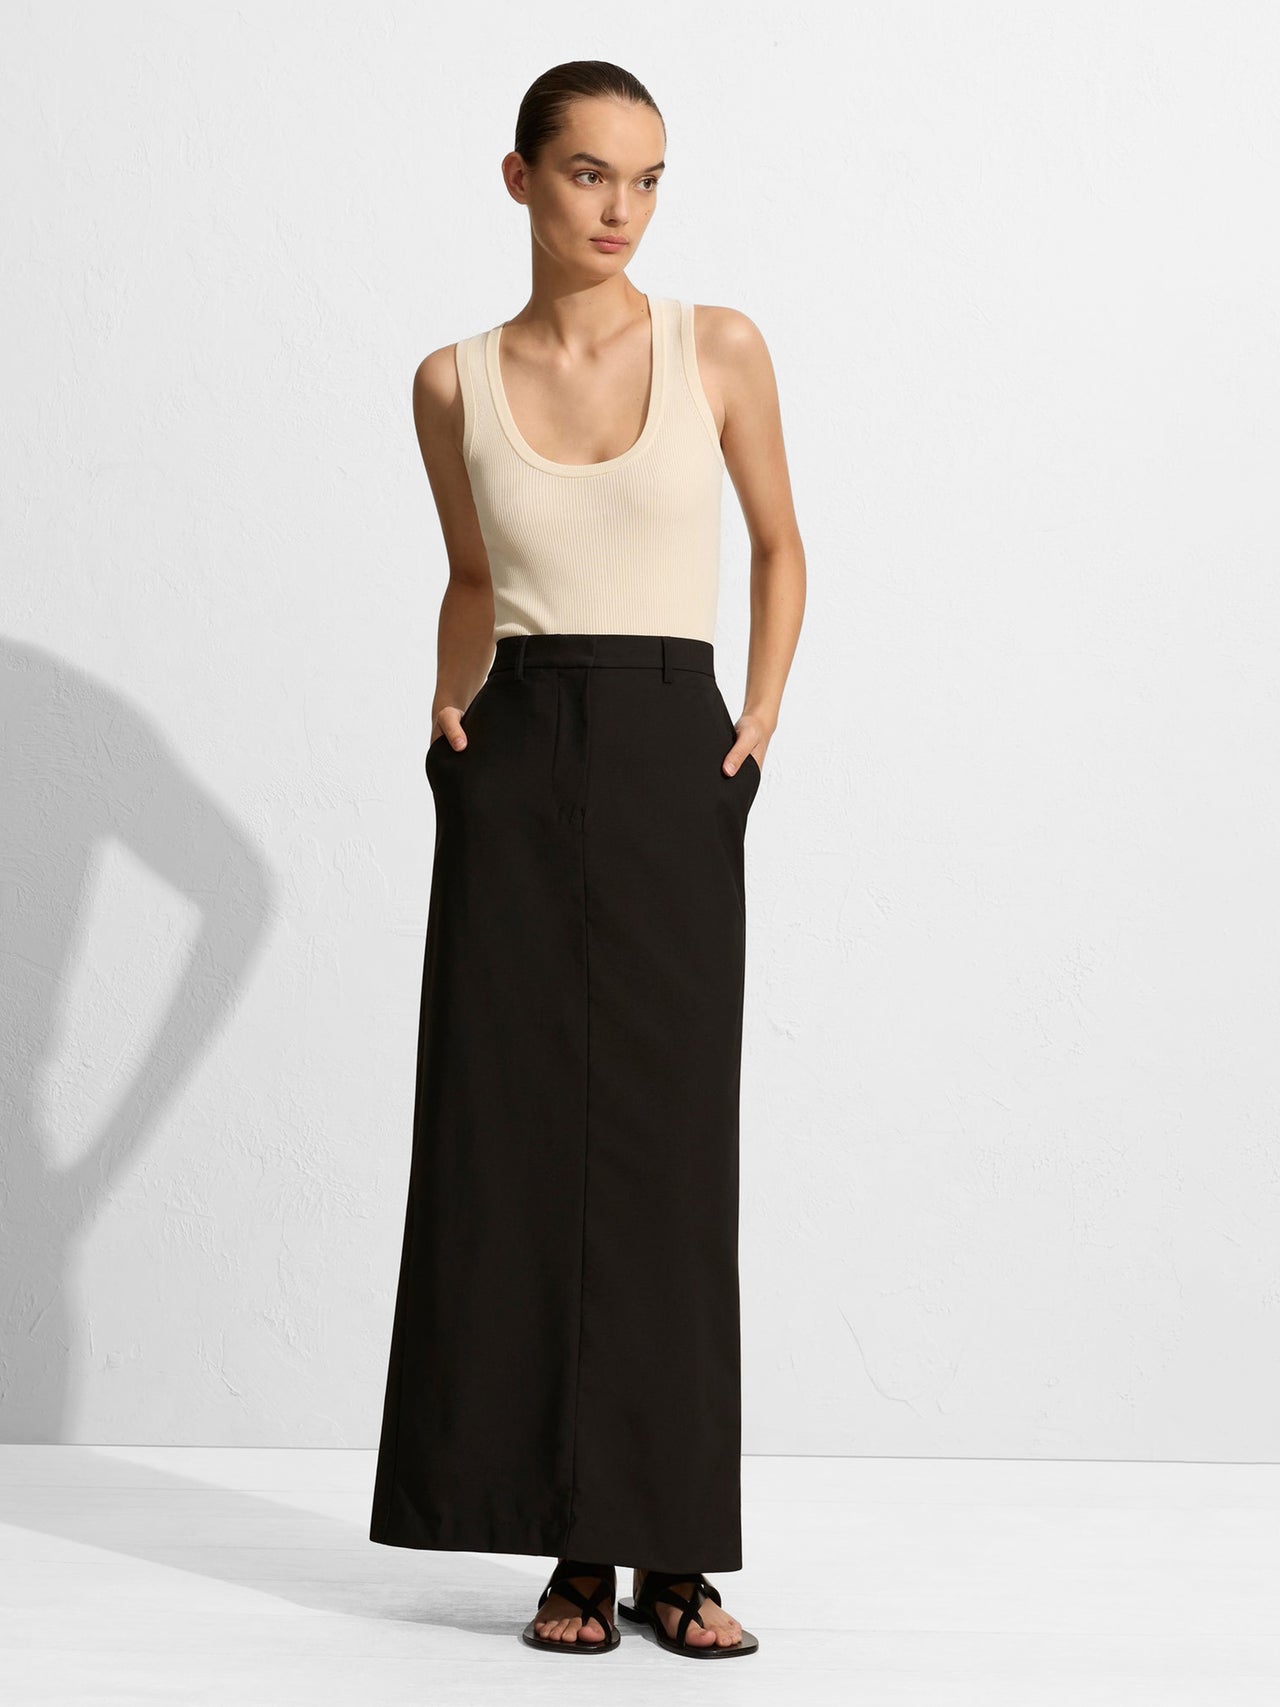 matteau-relaxed-tailored-skirt-black